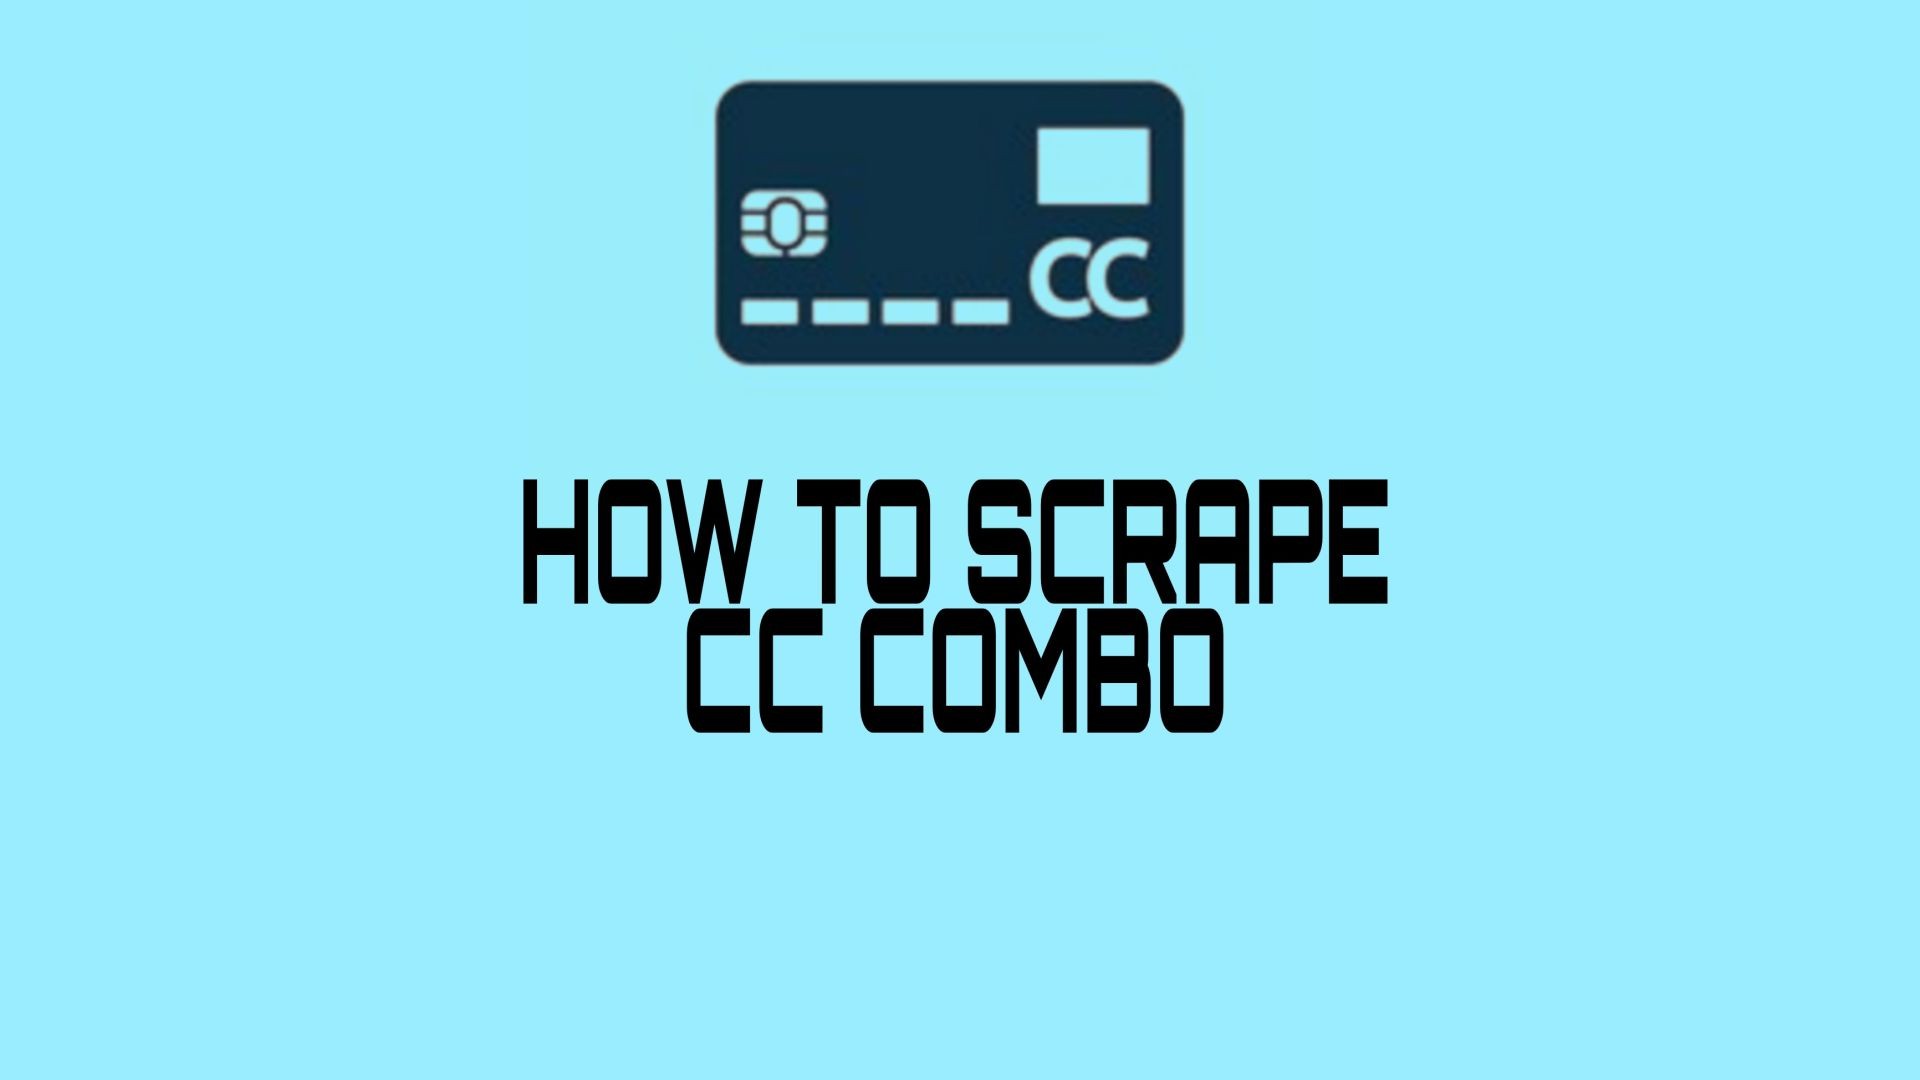 How to Scrape CC Combo